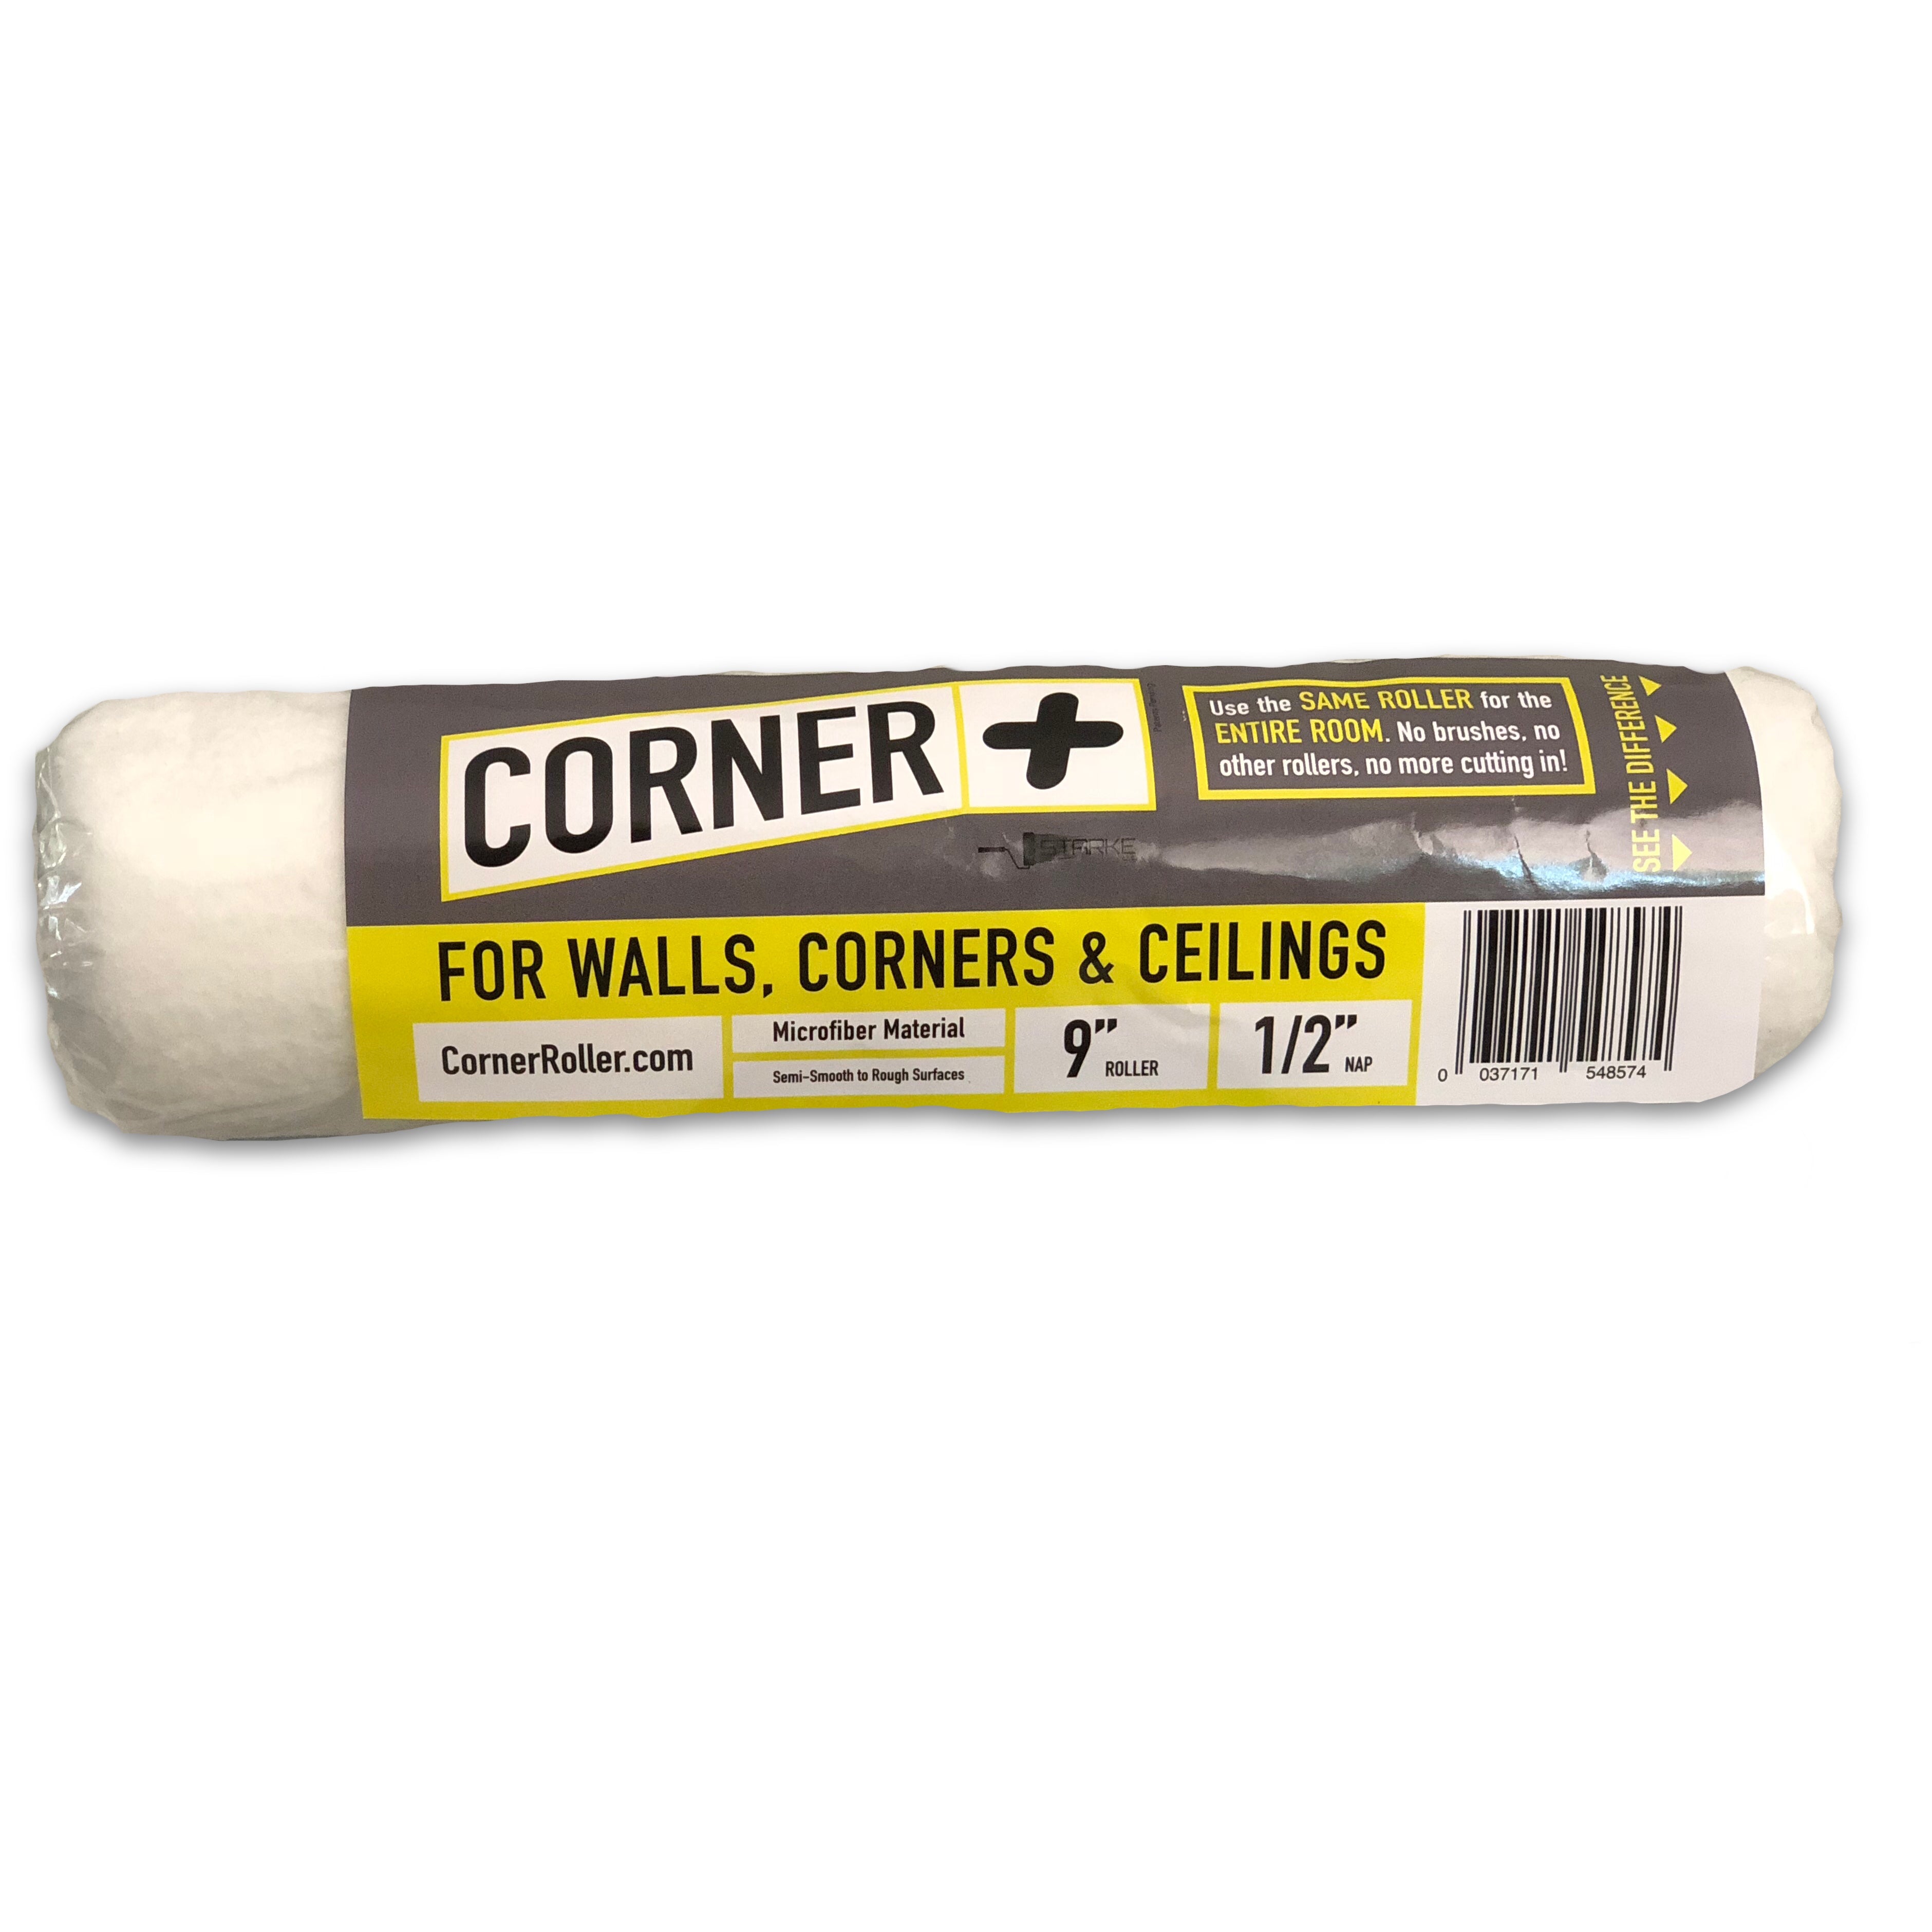 Corner+ Roller Microfiber